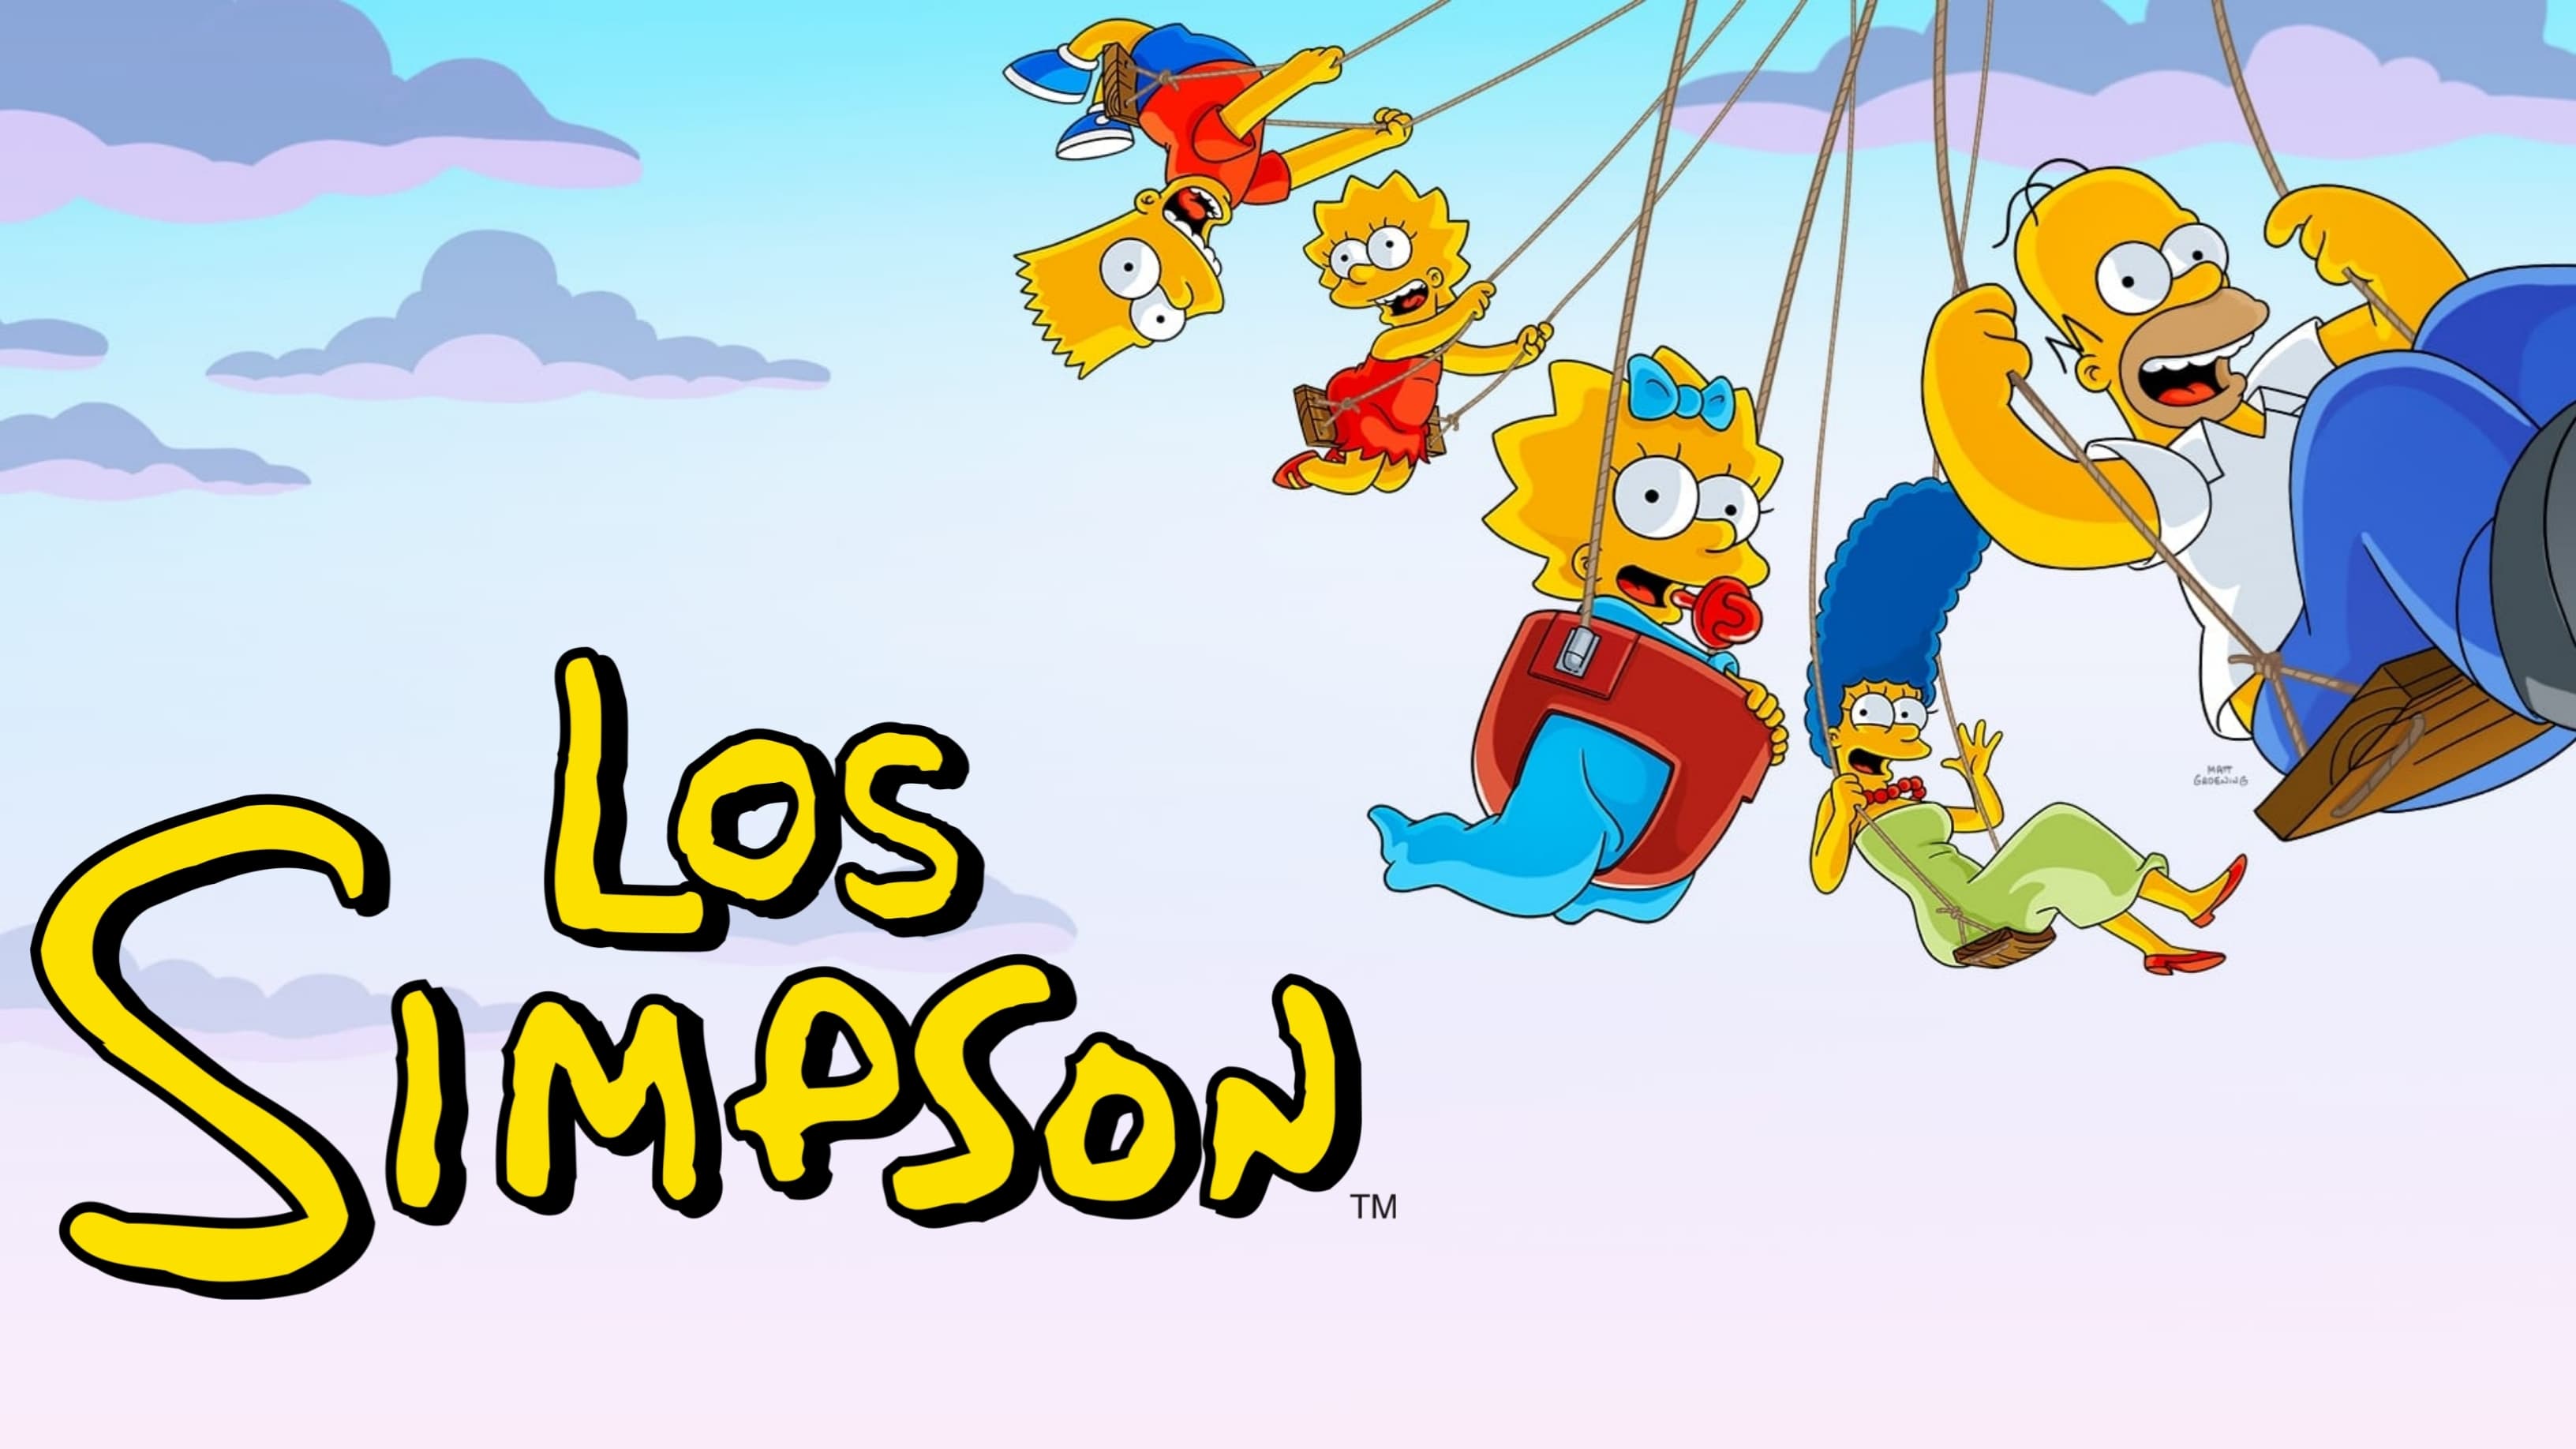 The Simpsons - Season 4